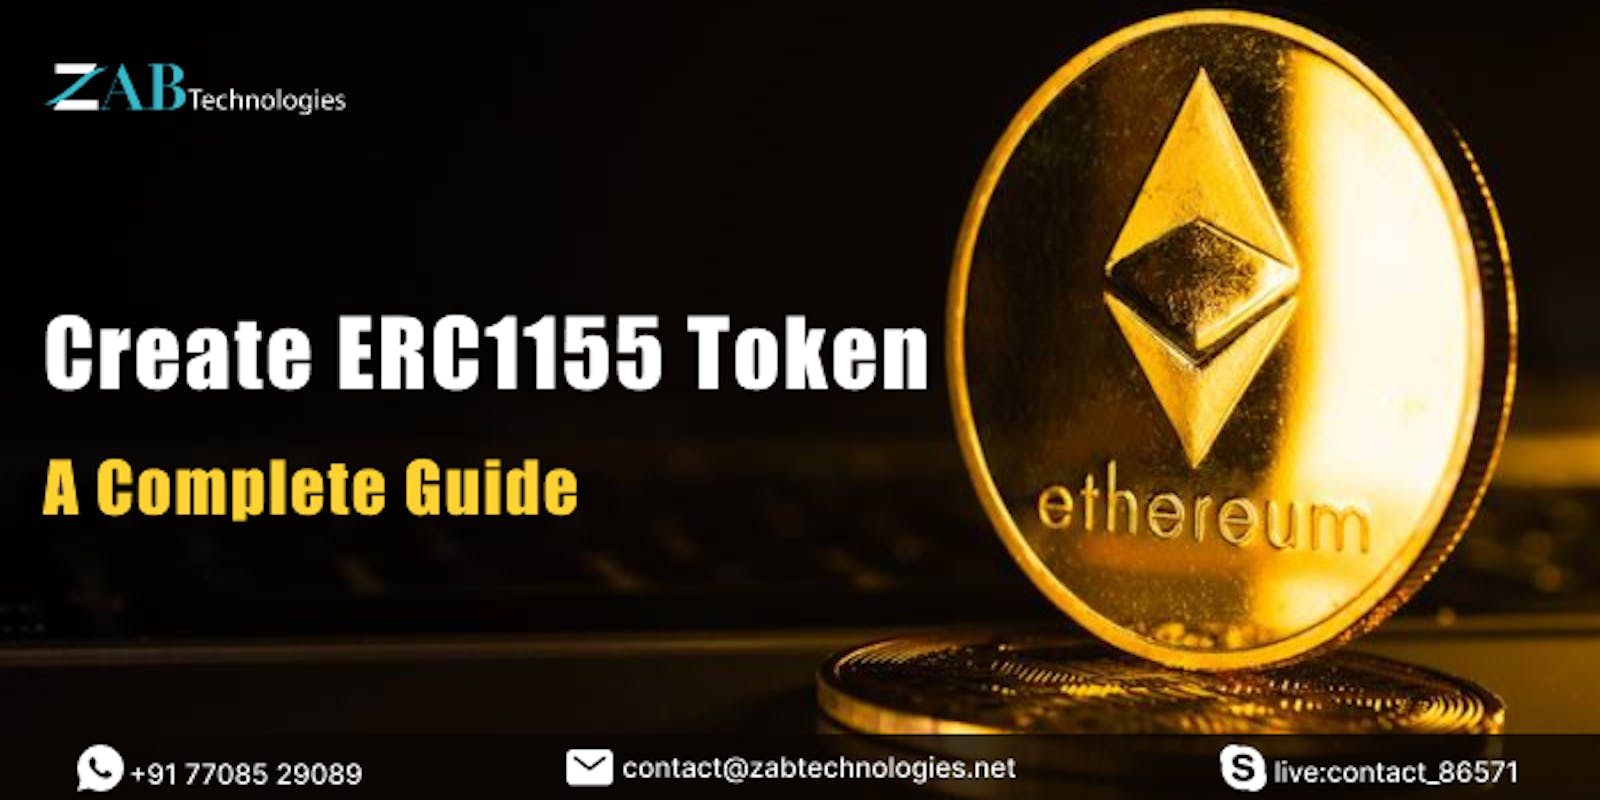 ERC1155 Token Standard - The Future of Tokenization